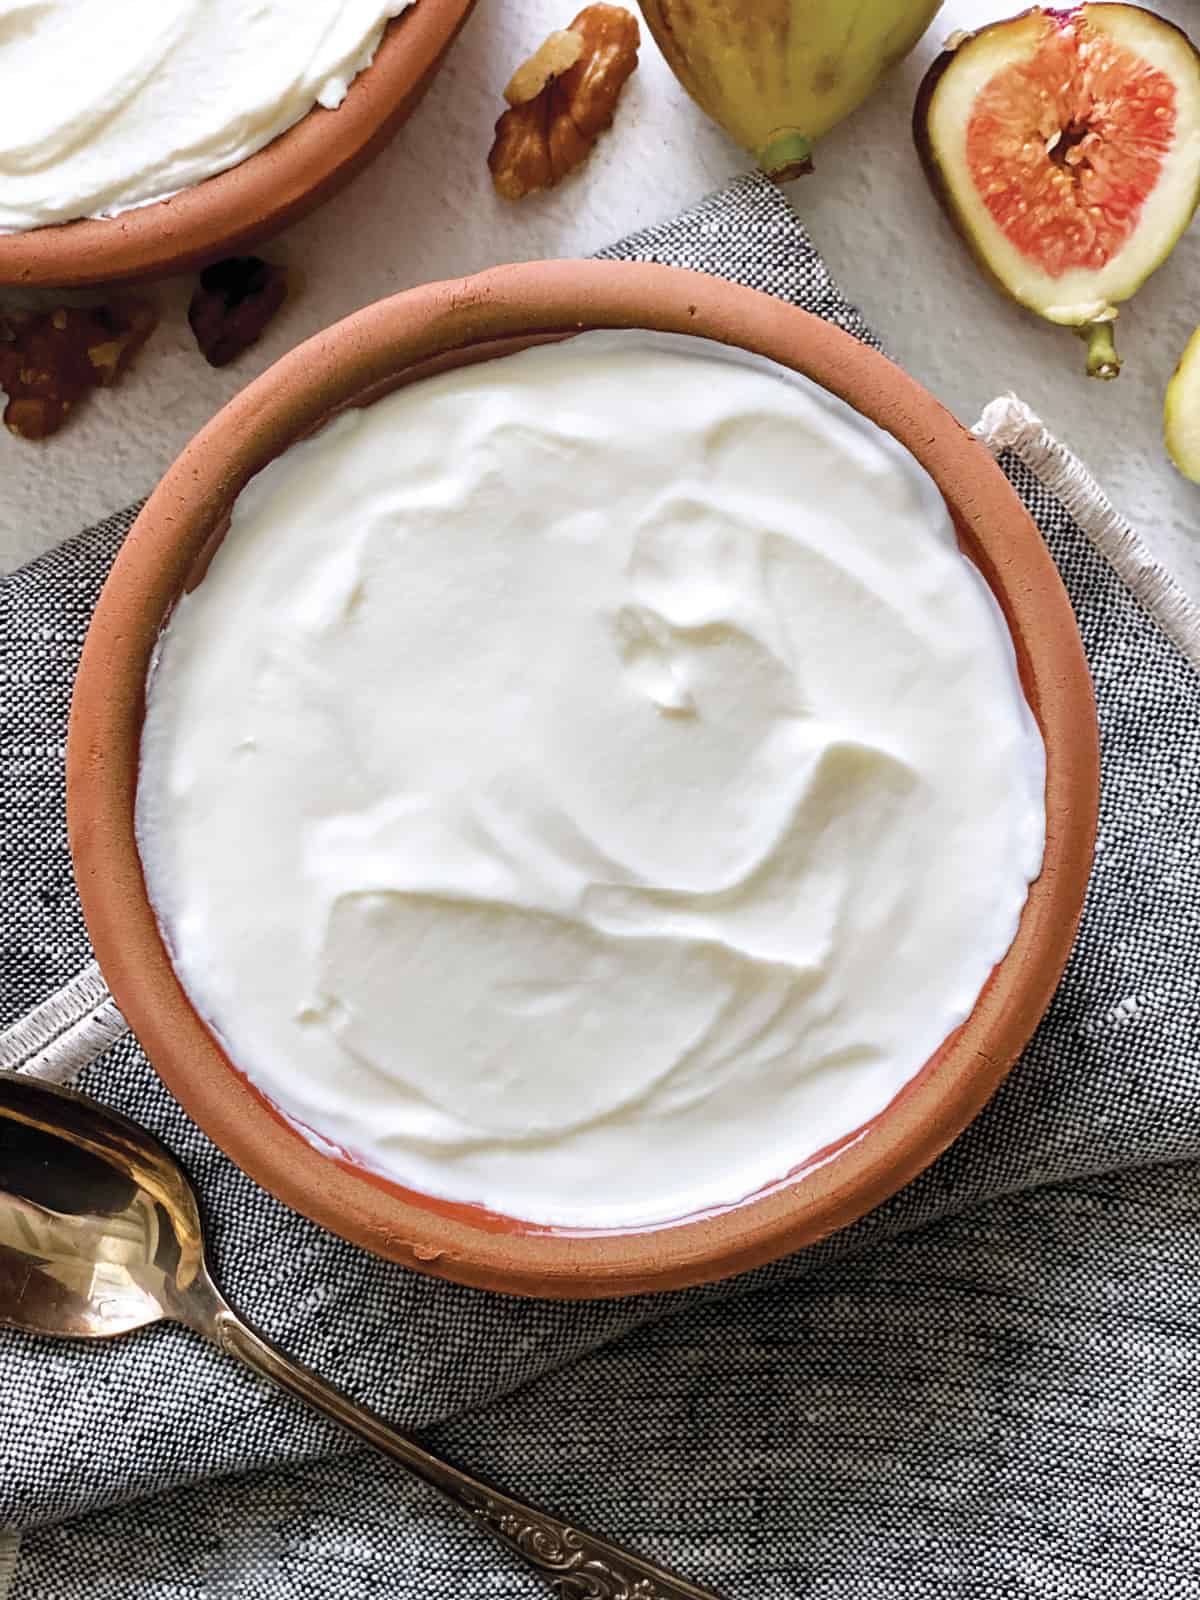 How To Make Greek Yogurt - The Greek Foodie